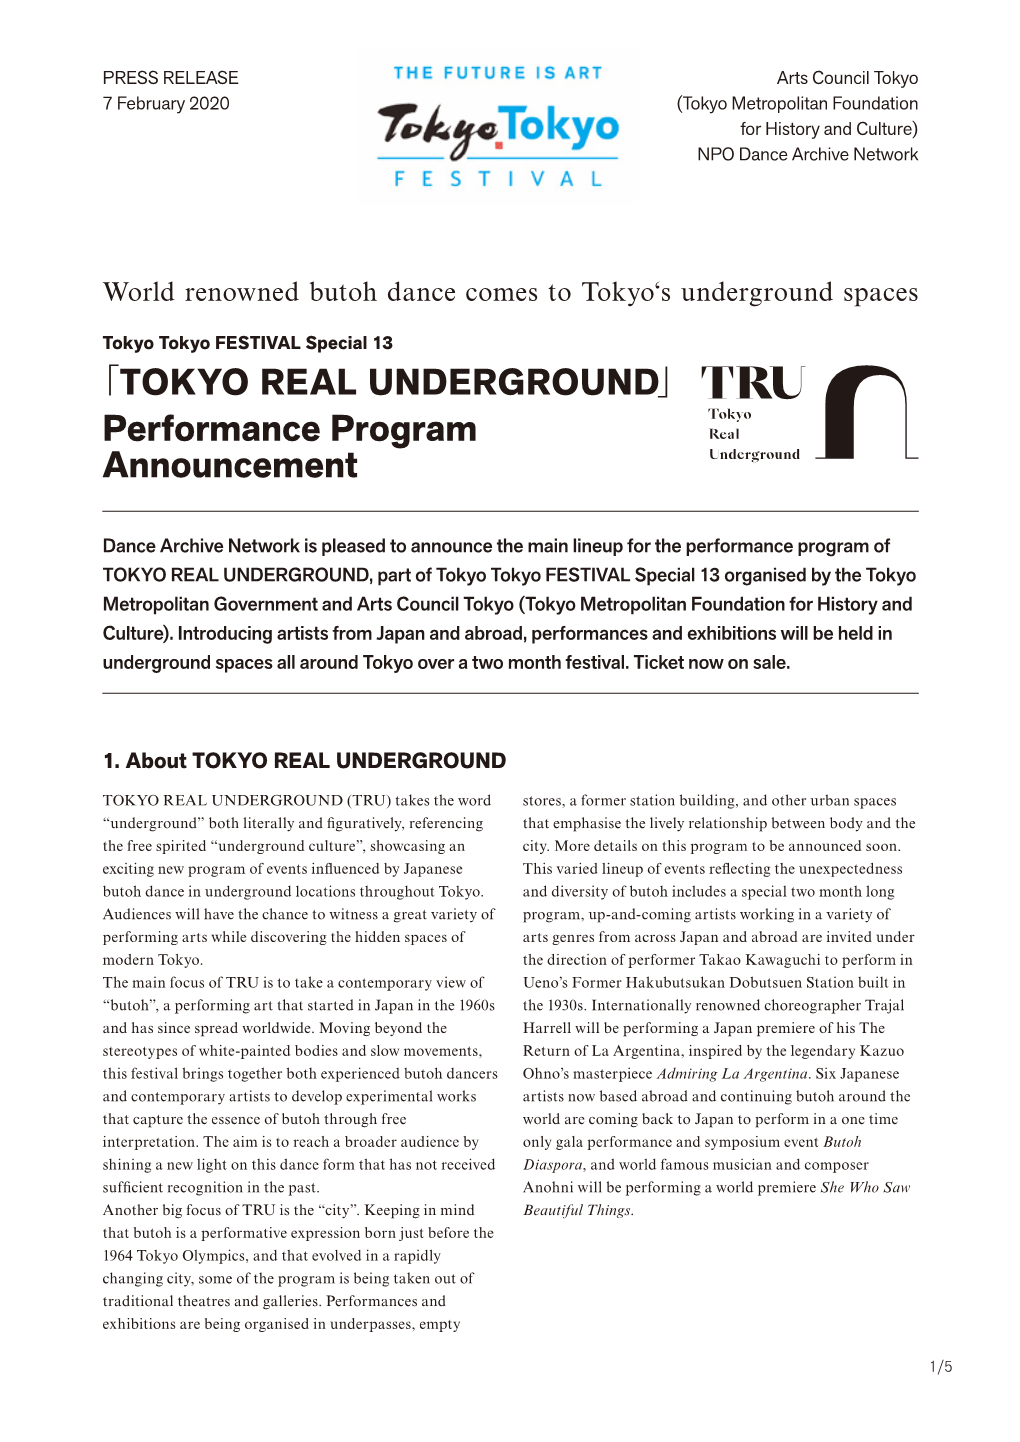 「TOKYO REAL UNDERGROUND」 Performance Program Announcement